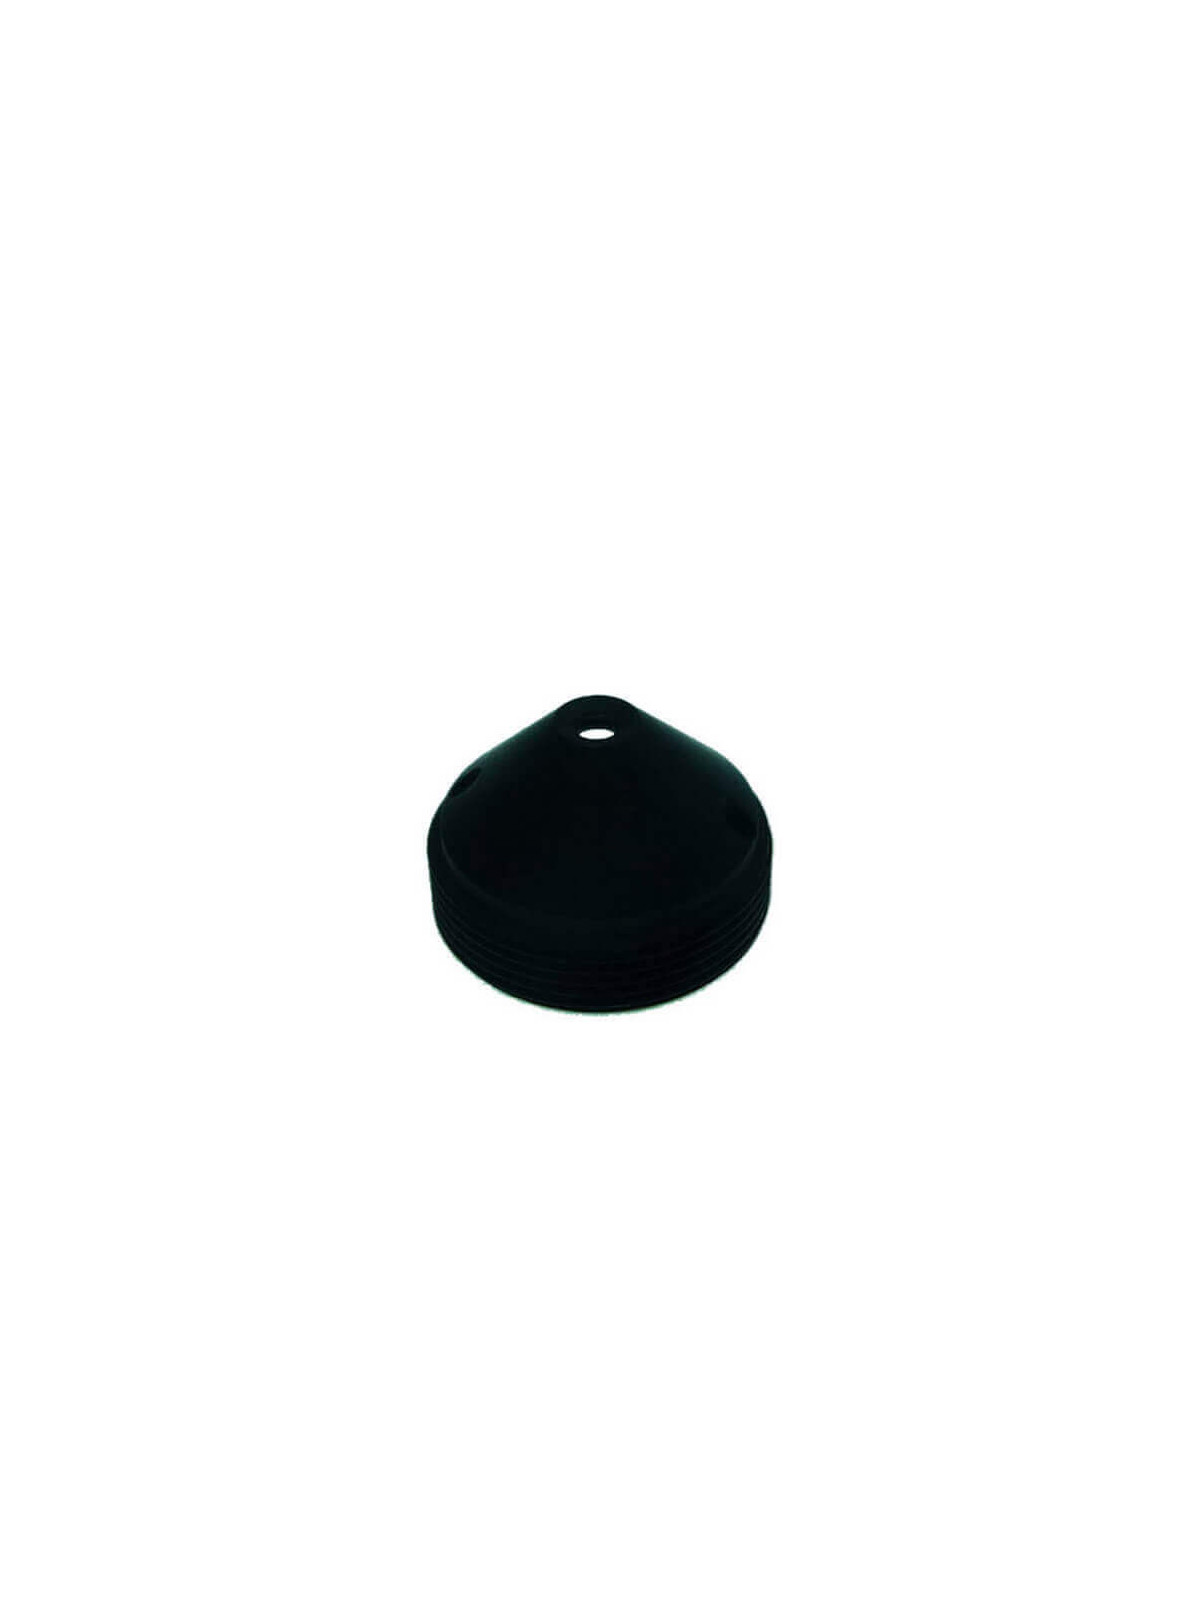 Lente fija mini tipo Board Lens pinhole 4.3mm